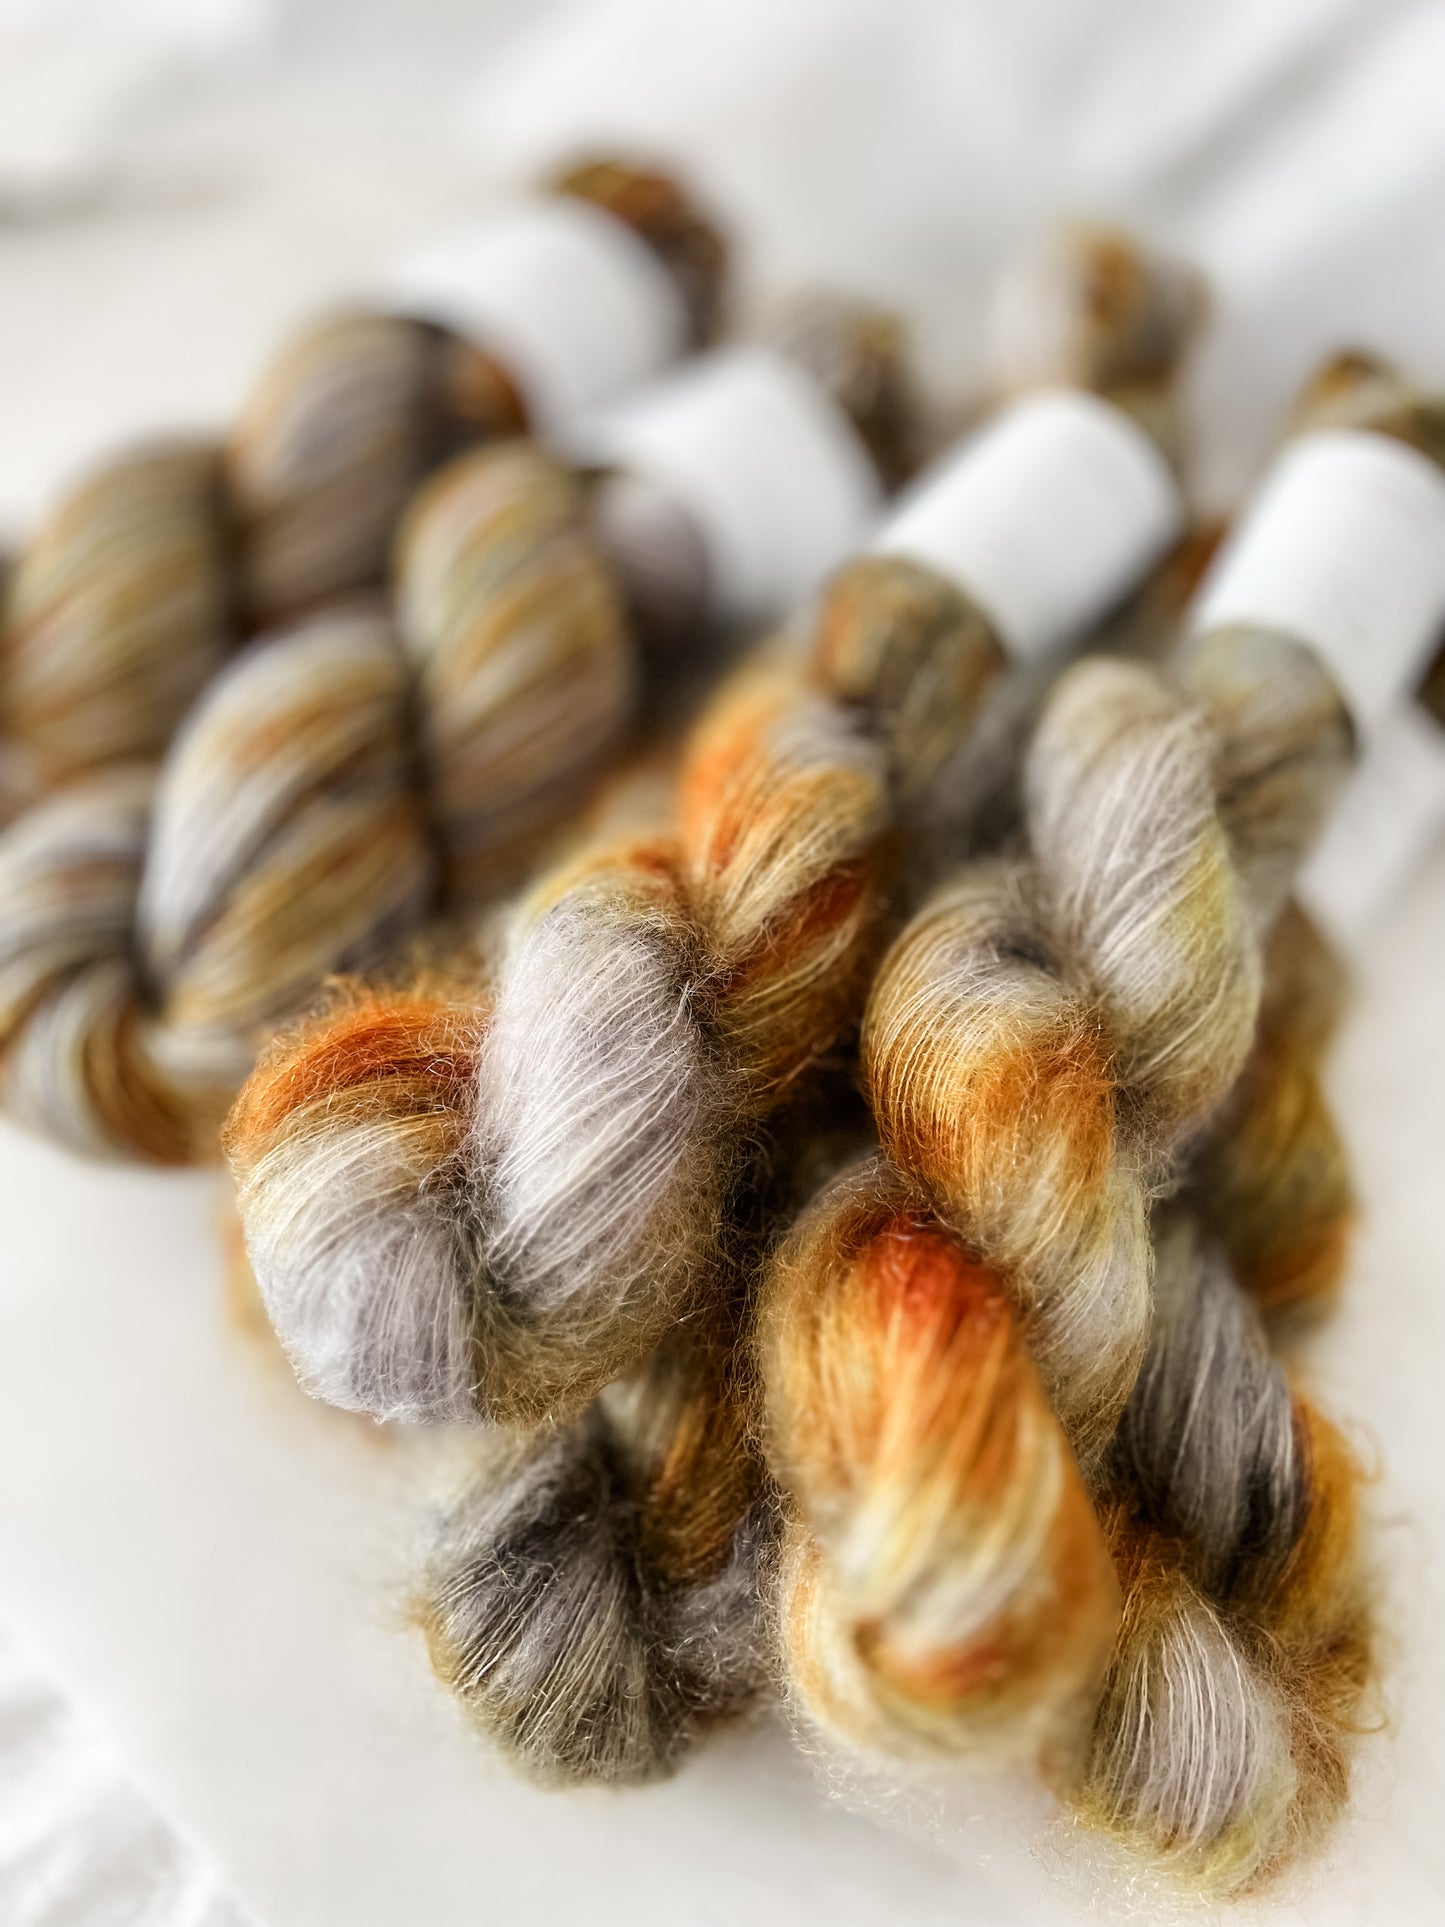 Oxidation - Mohair Mist - Hand Dyed Yarn - Variegated Yarn